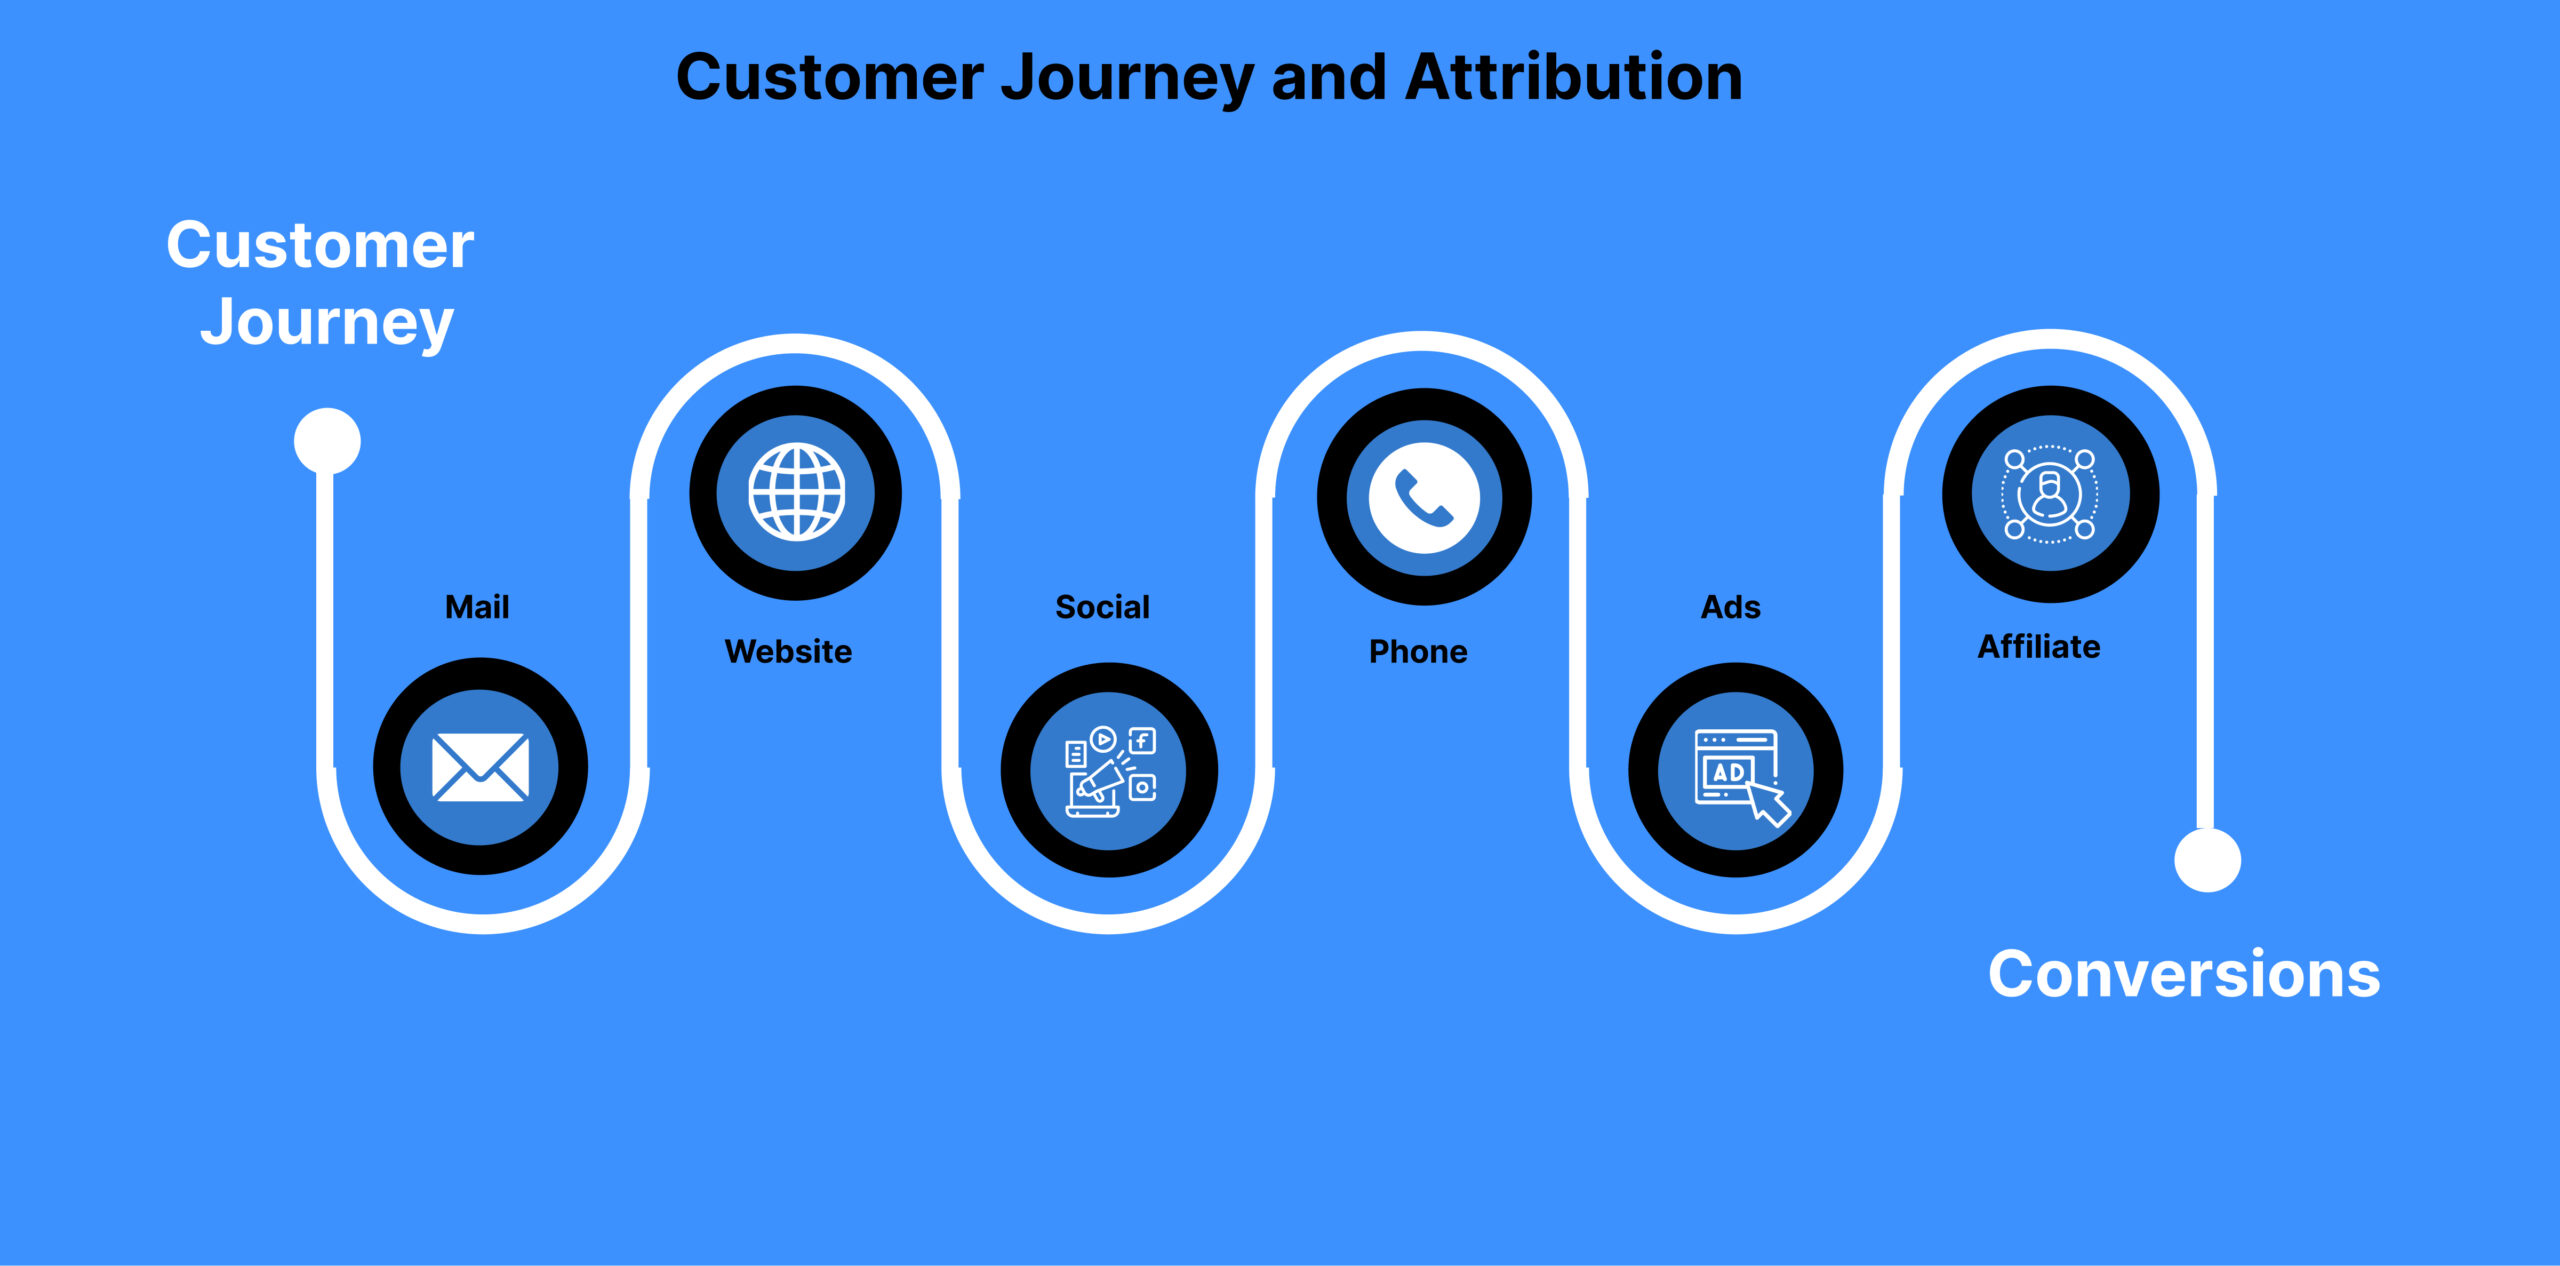 Customer Journey and Attribution